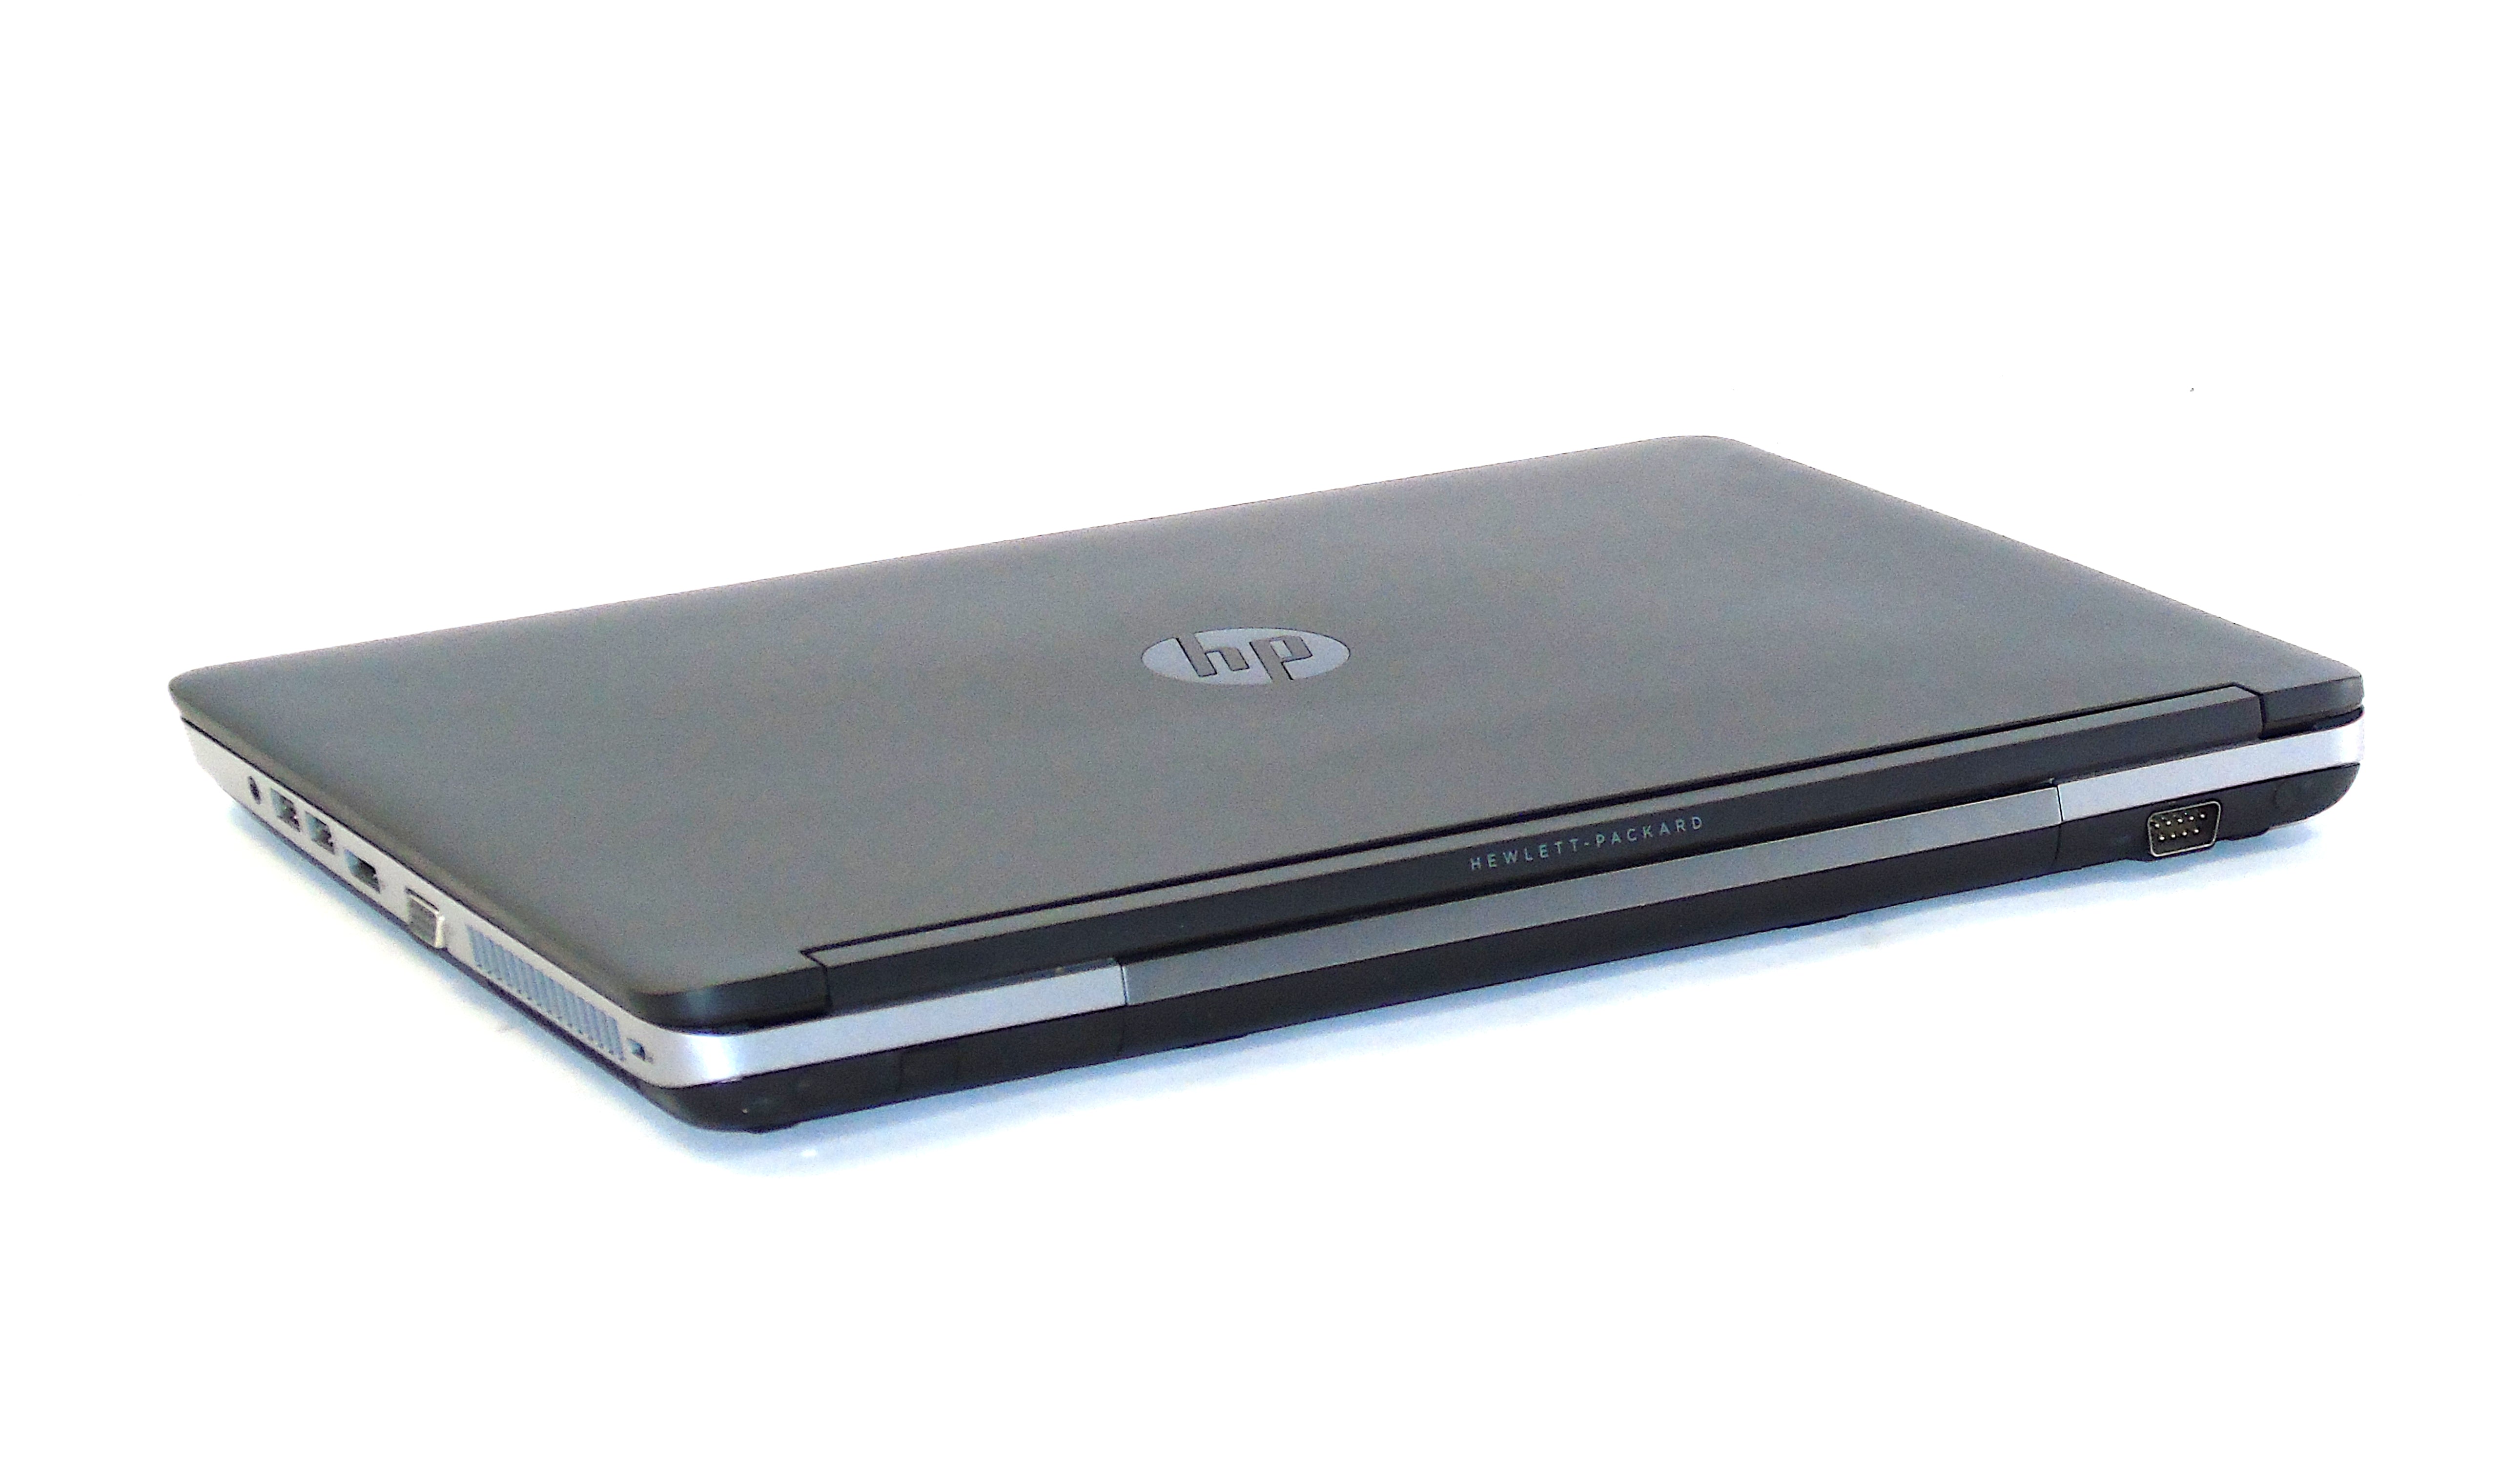 HP ProBook 650 G1 Laptop, 15.6" Intel Core i7, 8GB RAM, 256GB SSD